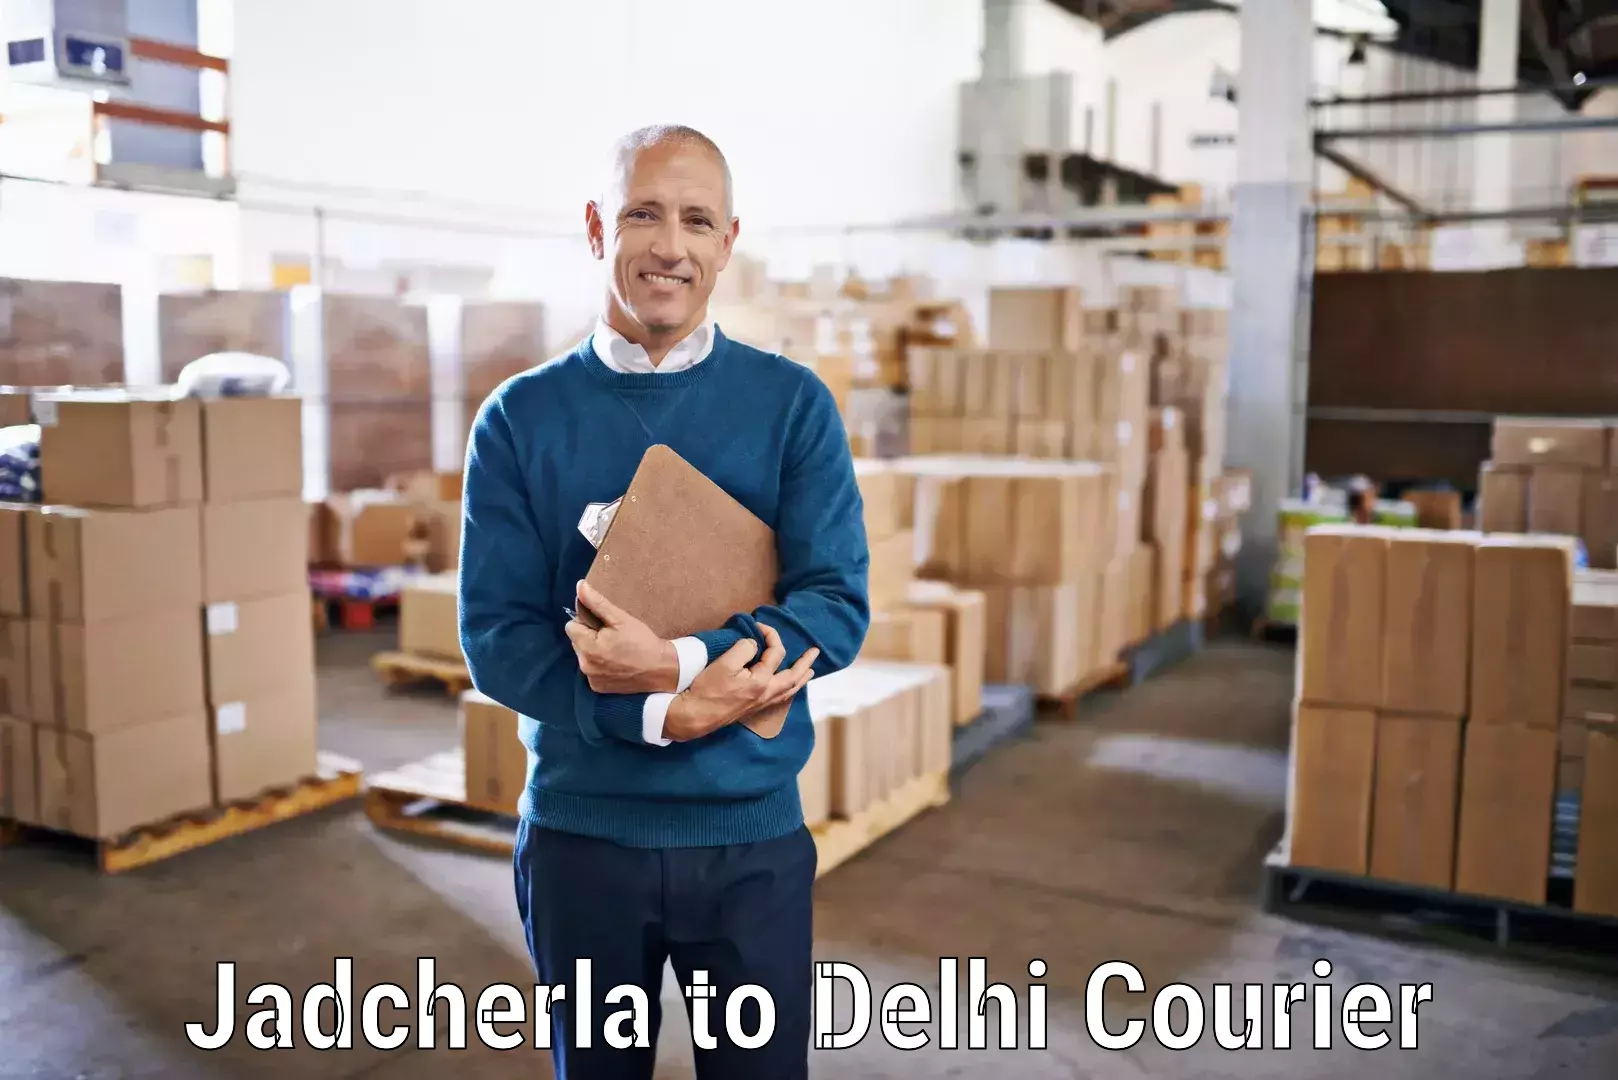 Global logistics network Jadcherla to Delhi